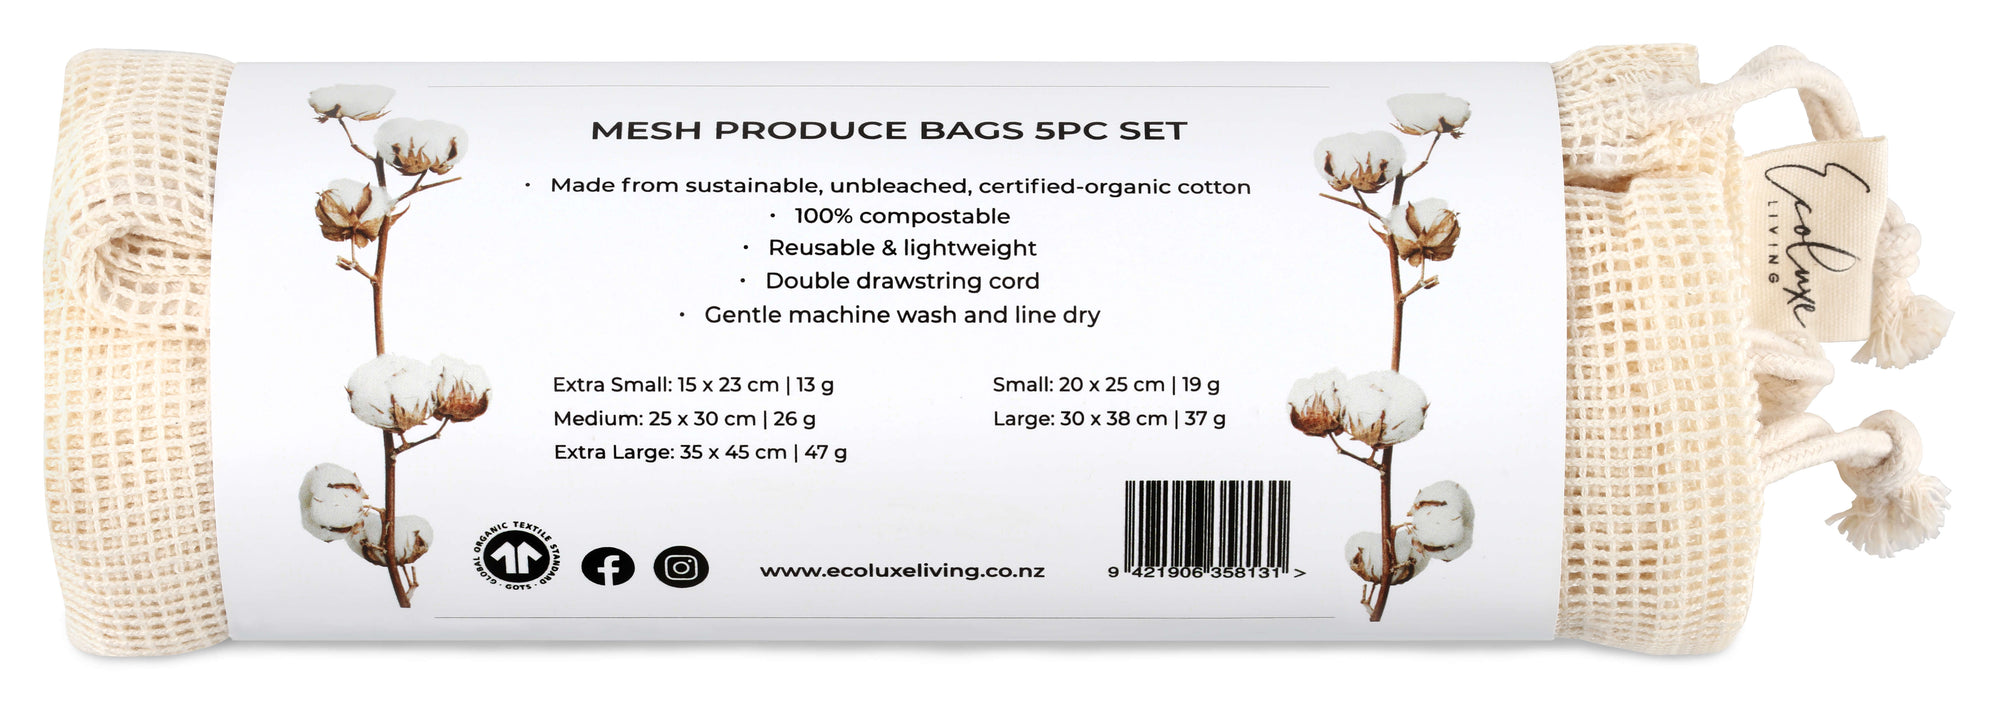 Mesh Produce Bags Set 5PC - EcoLuxe Living